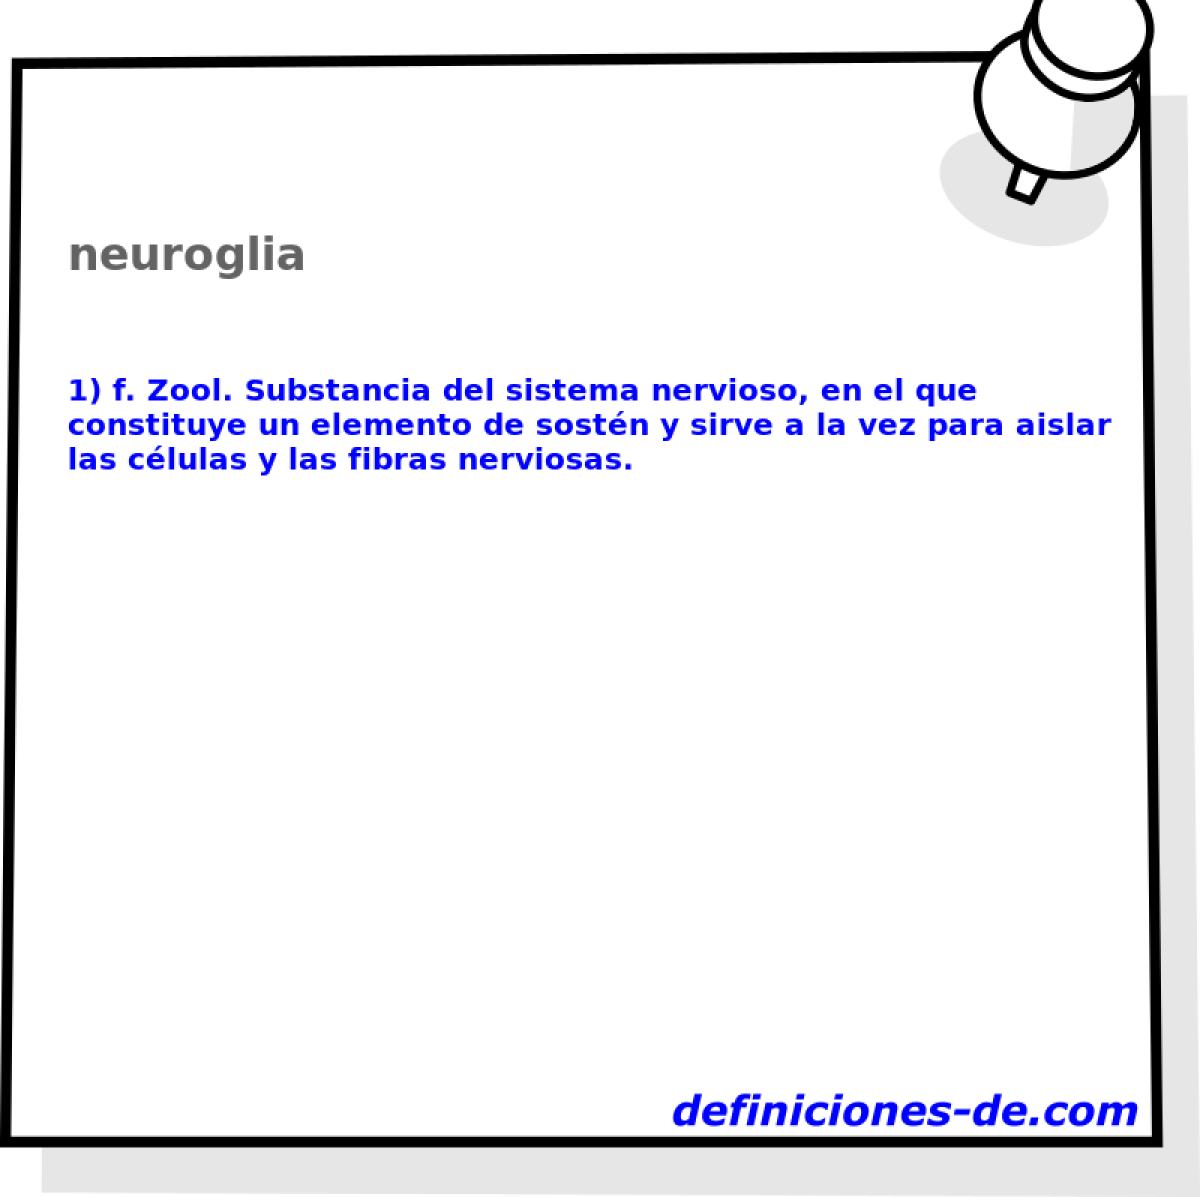 neuroglia 